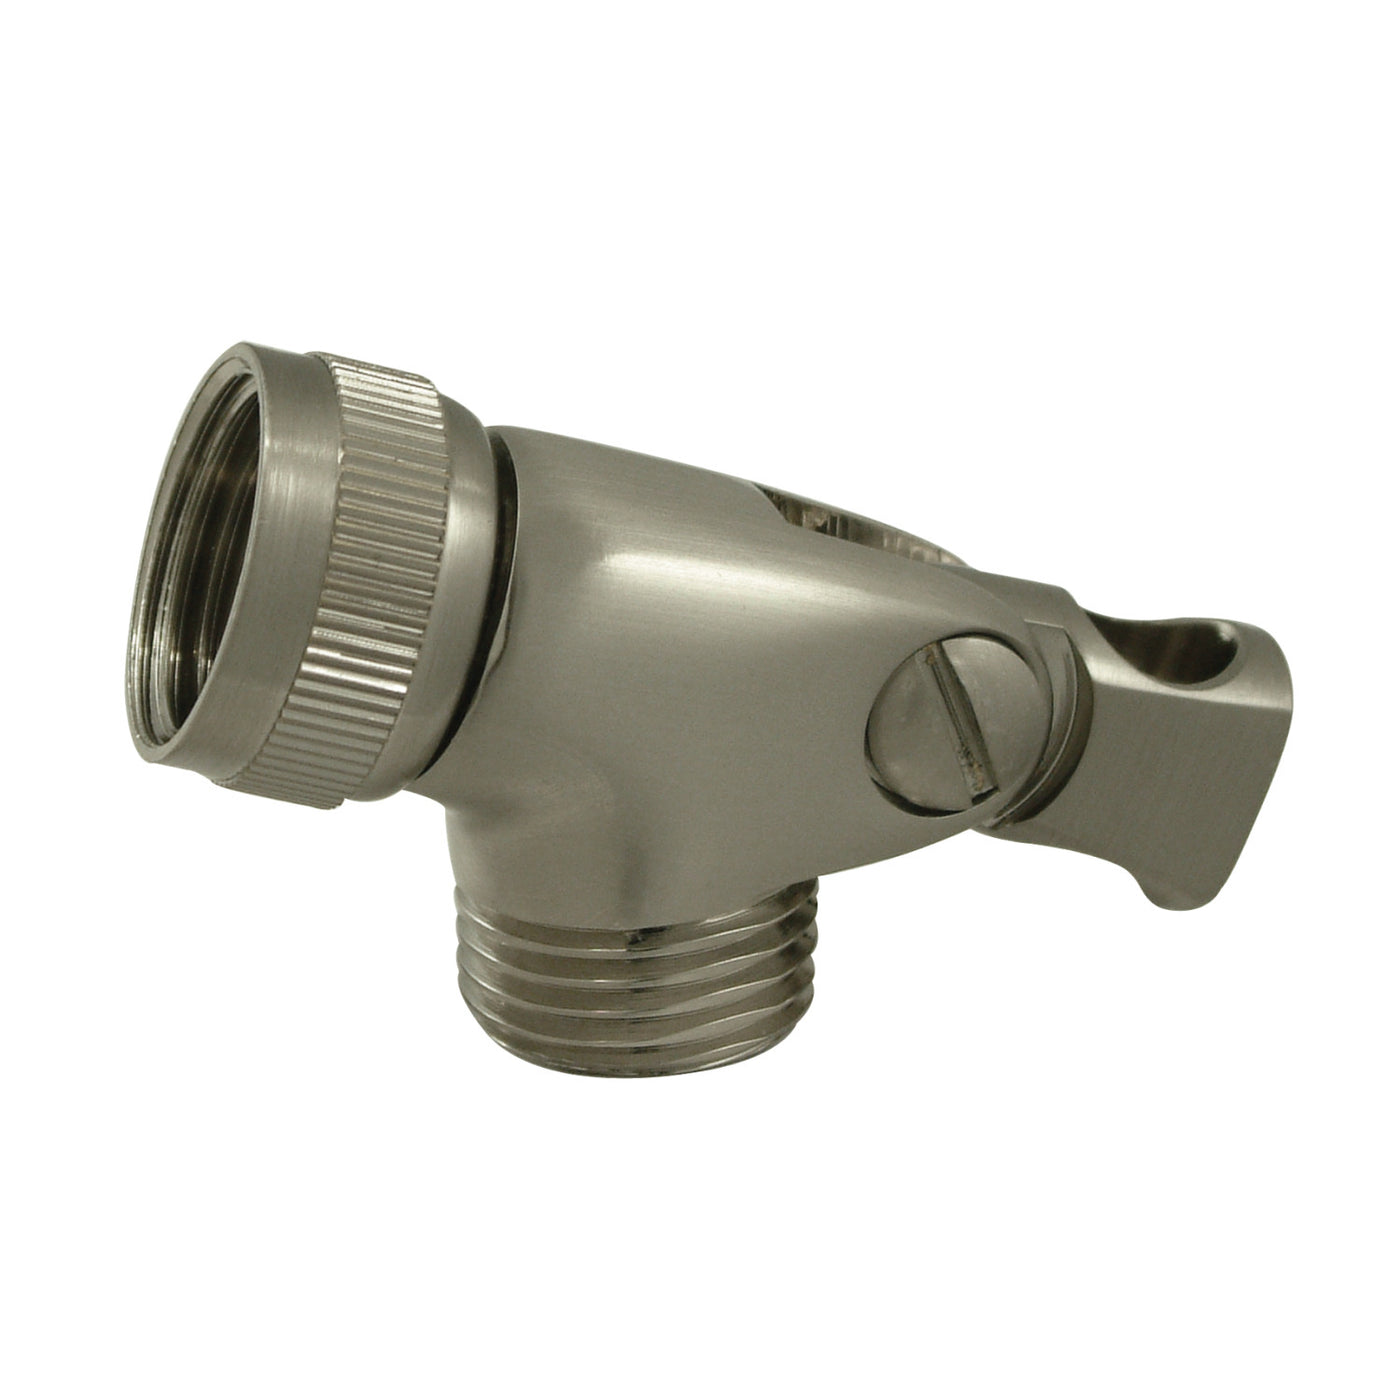 Elements of Design DK172A8 Swivel Shower Connector, Brushed Nickel